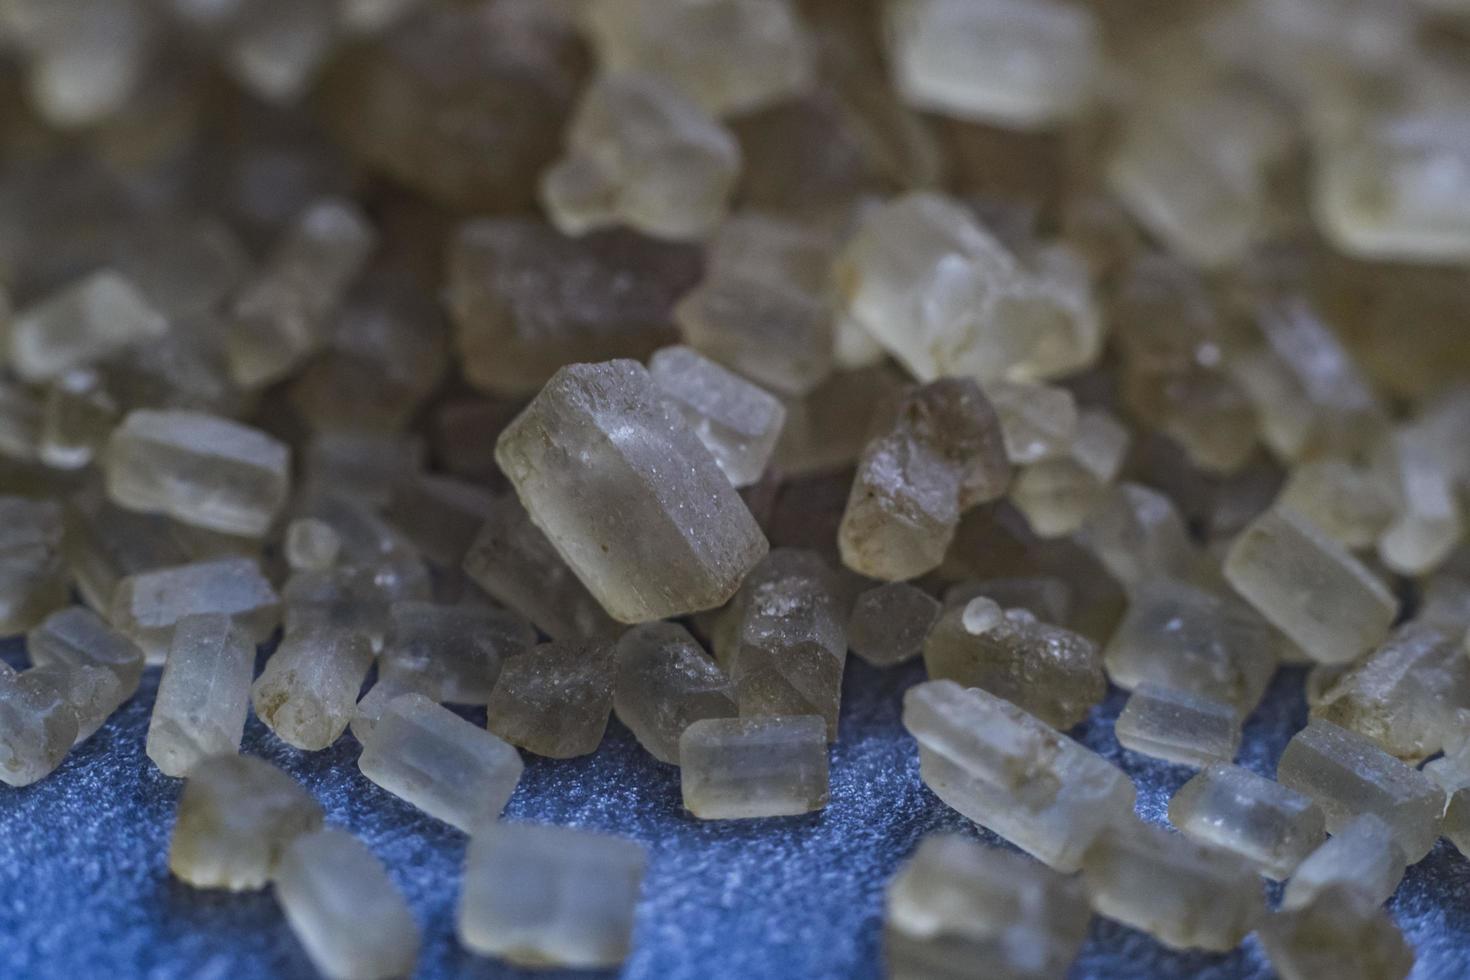 cane brown sugar macro crystals photo